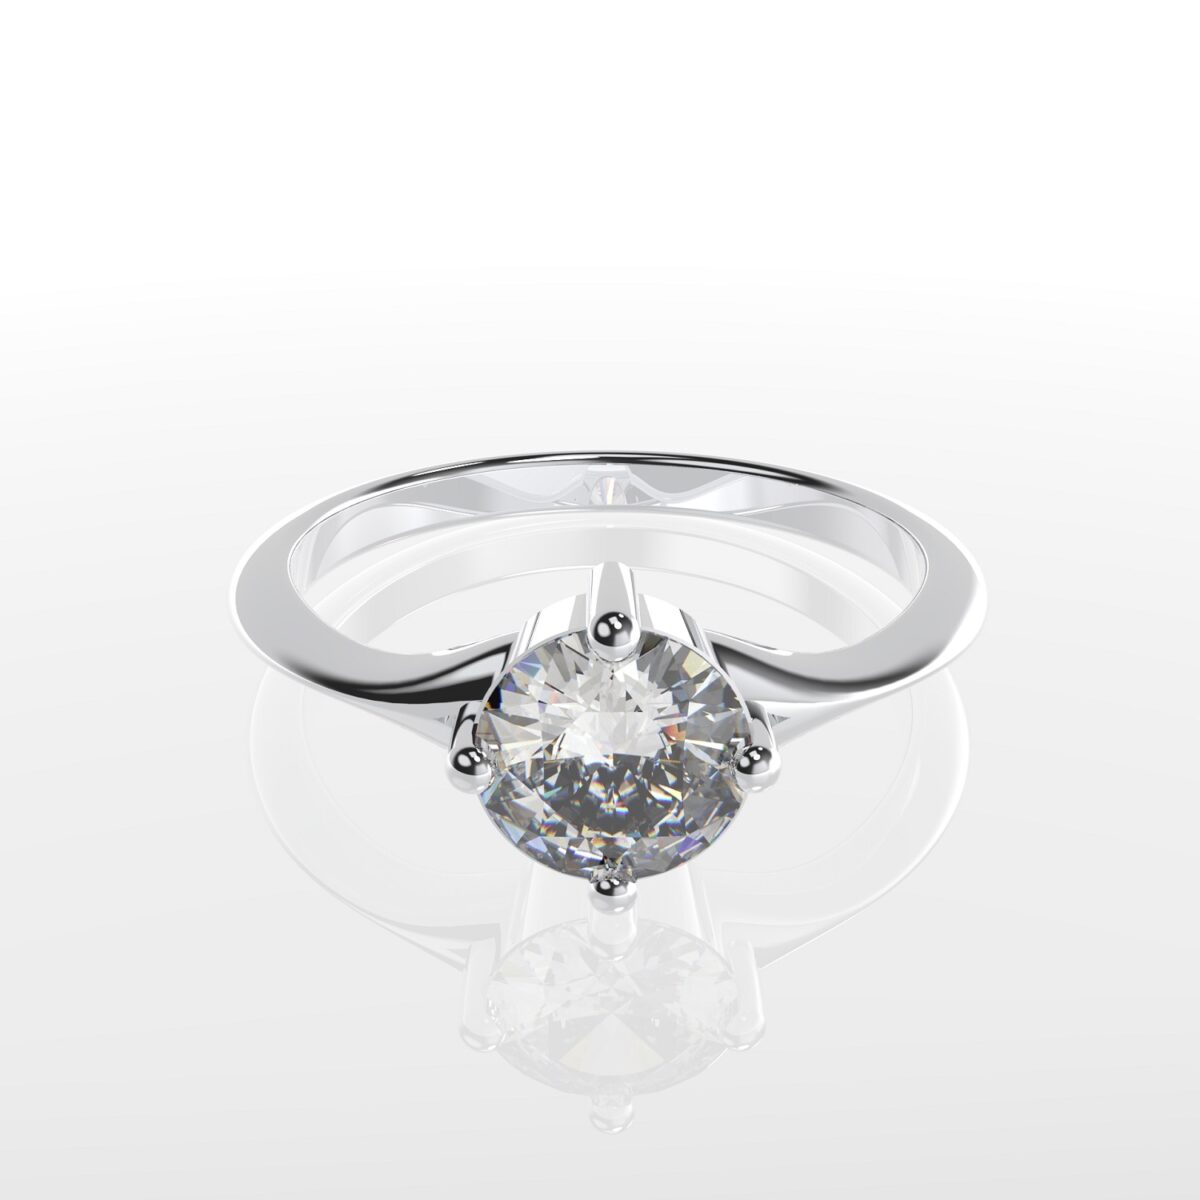 Round cut lab grown diamond engagement ring